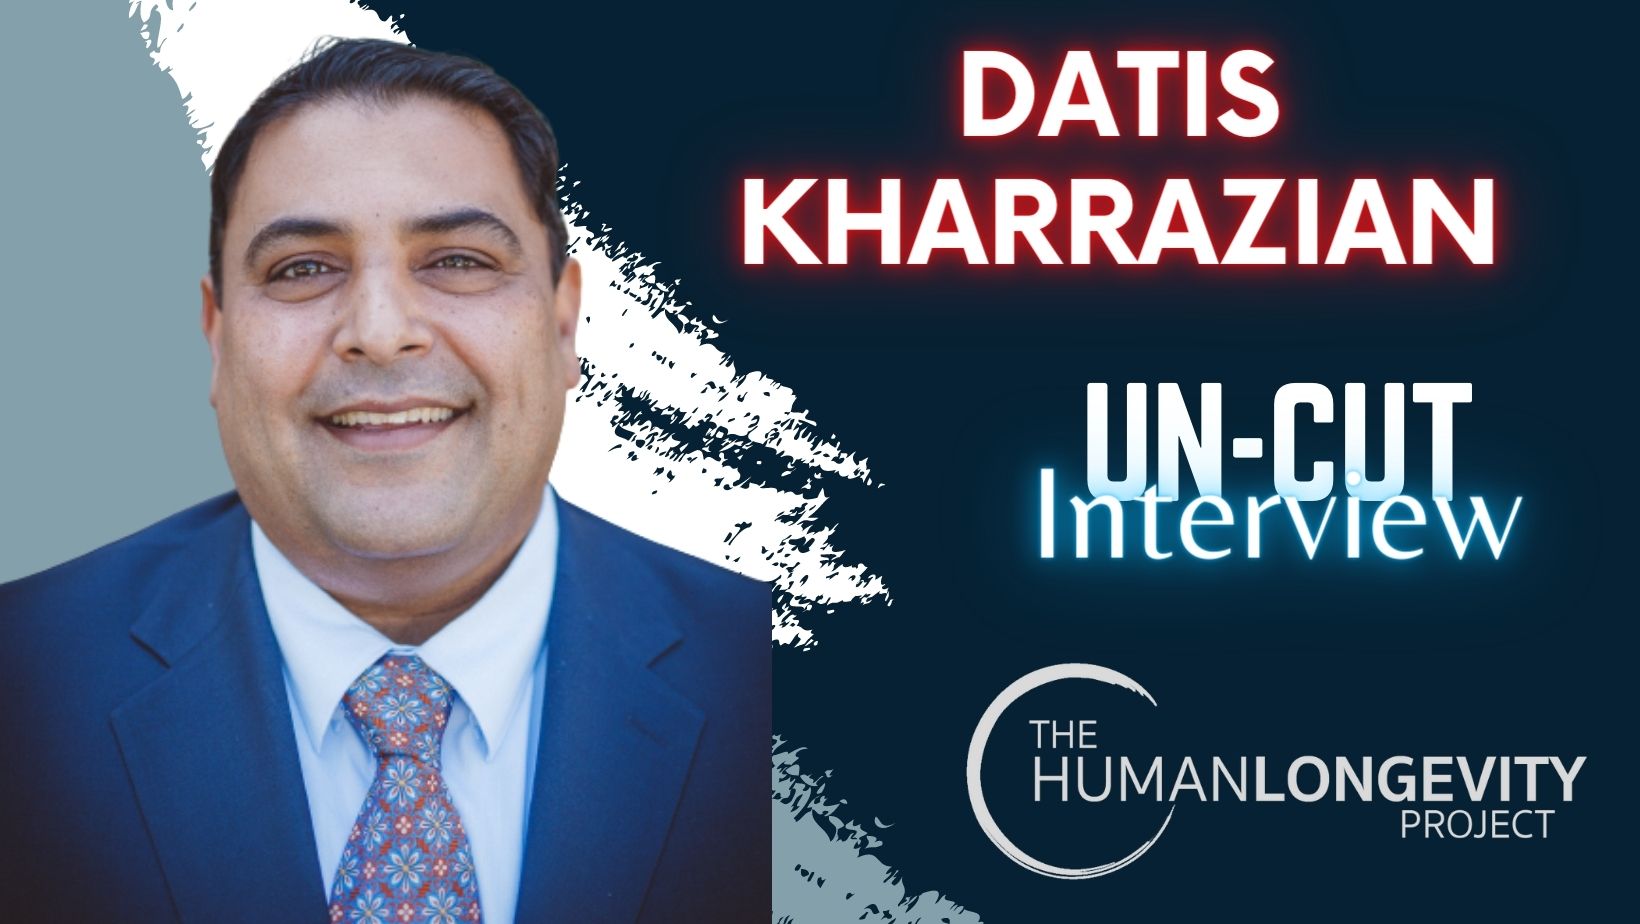 Human Longevity Project Uncut Interview With Dr. Datis Kharrazian